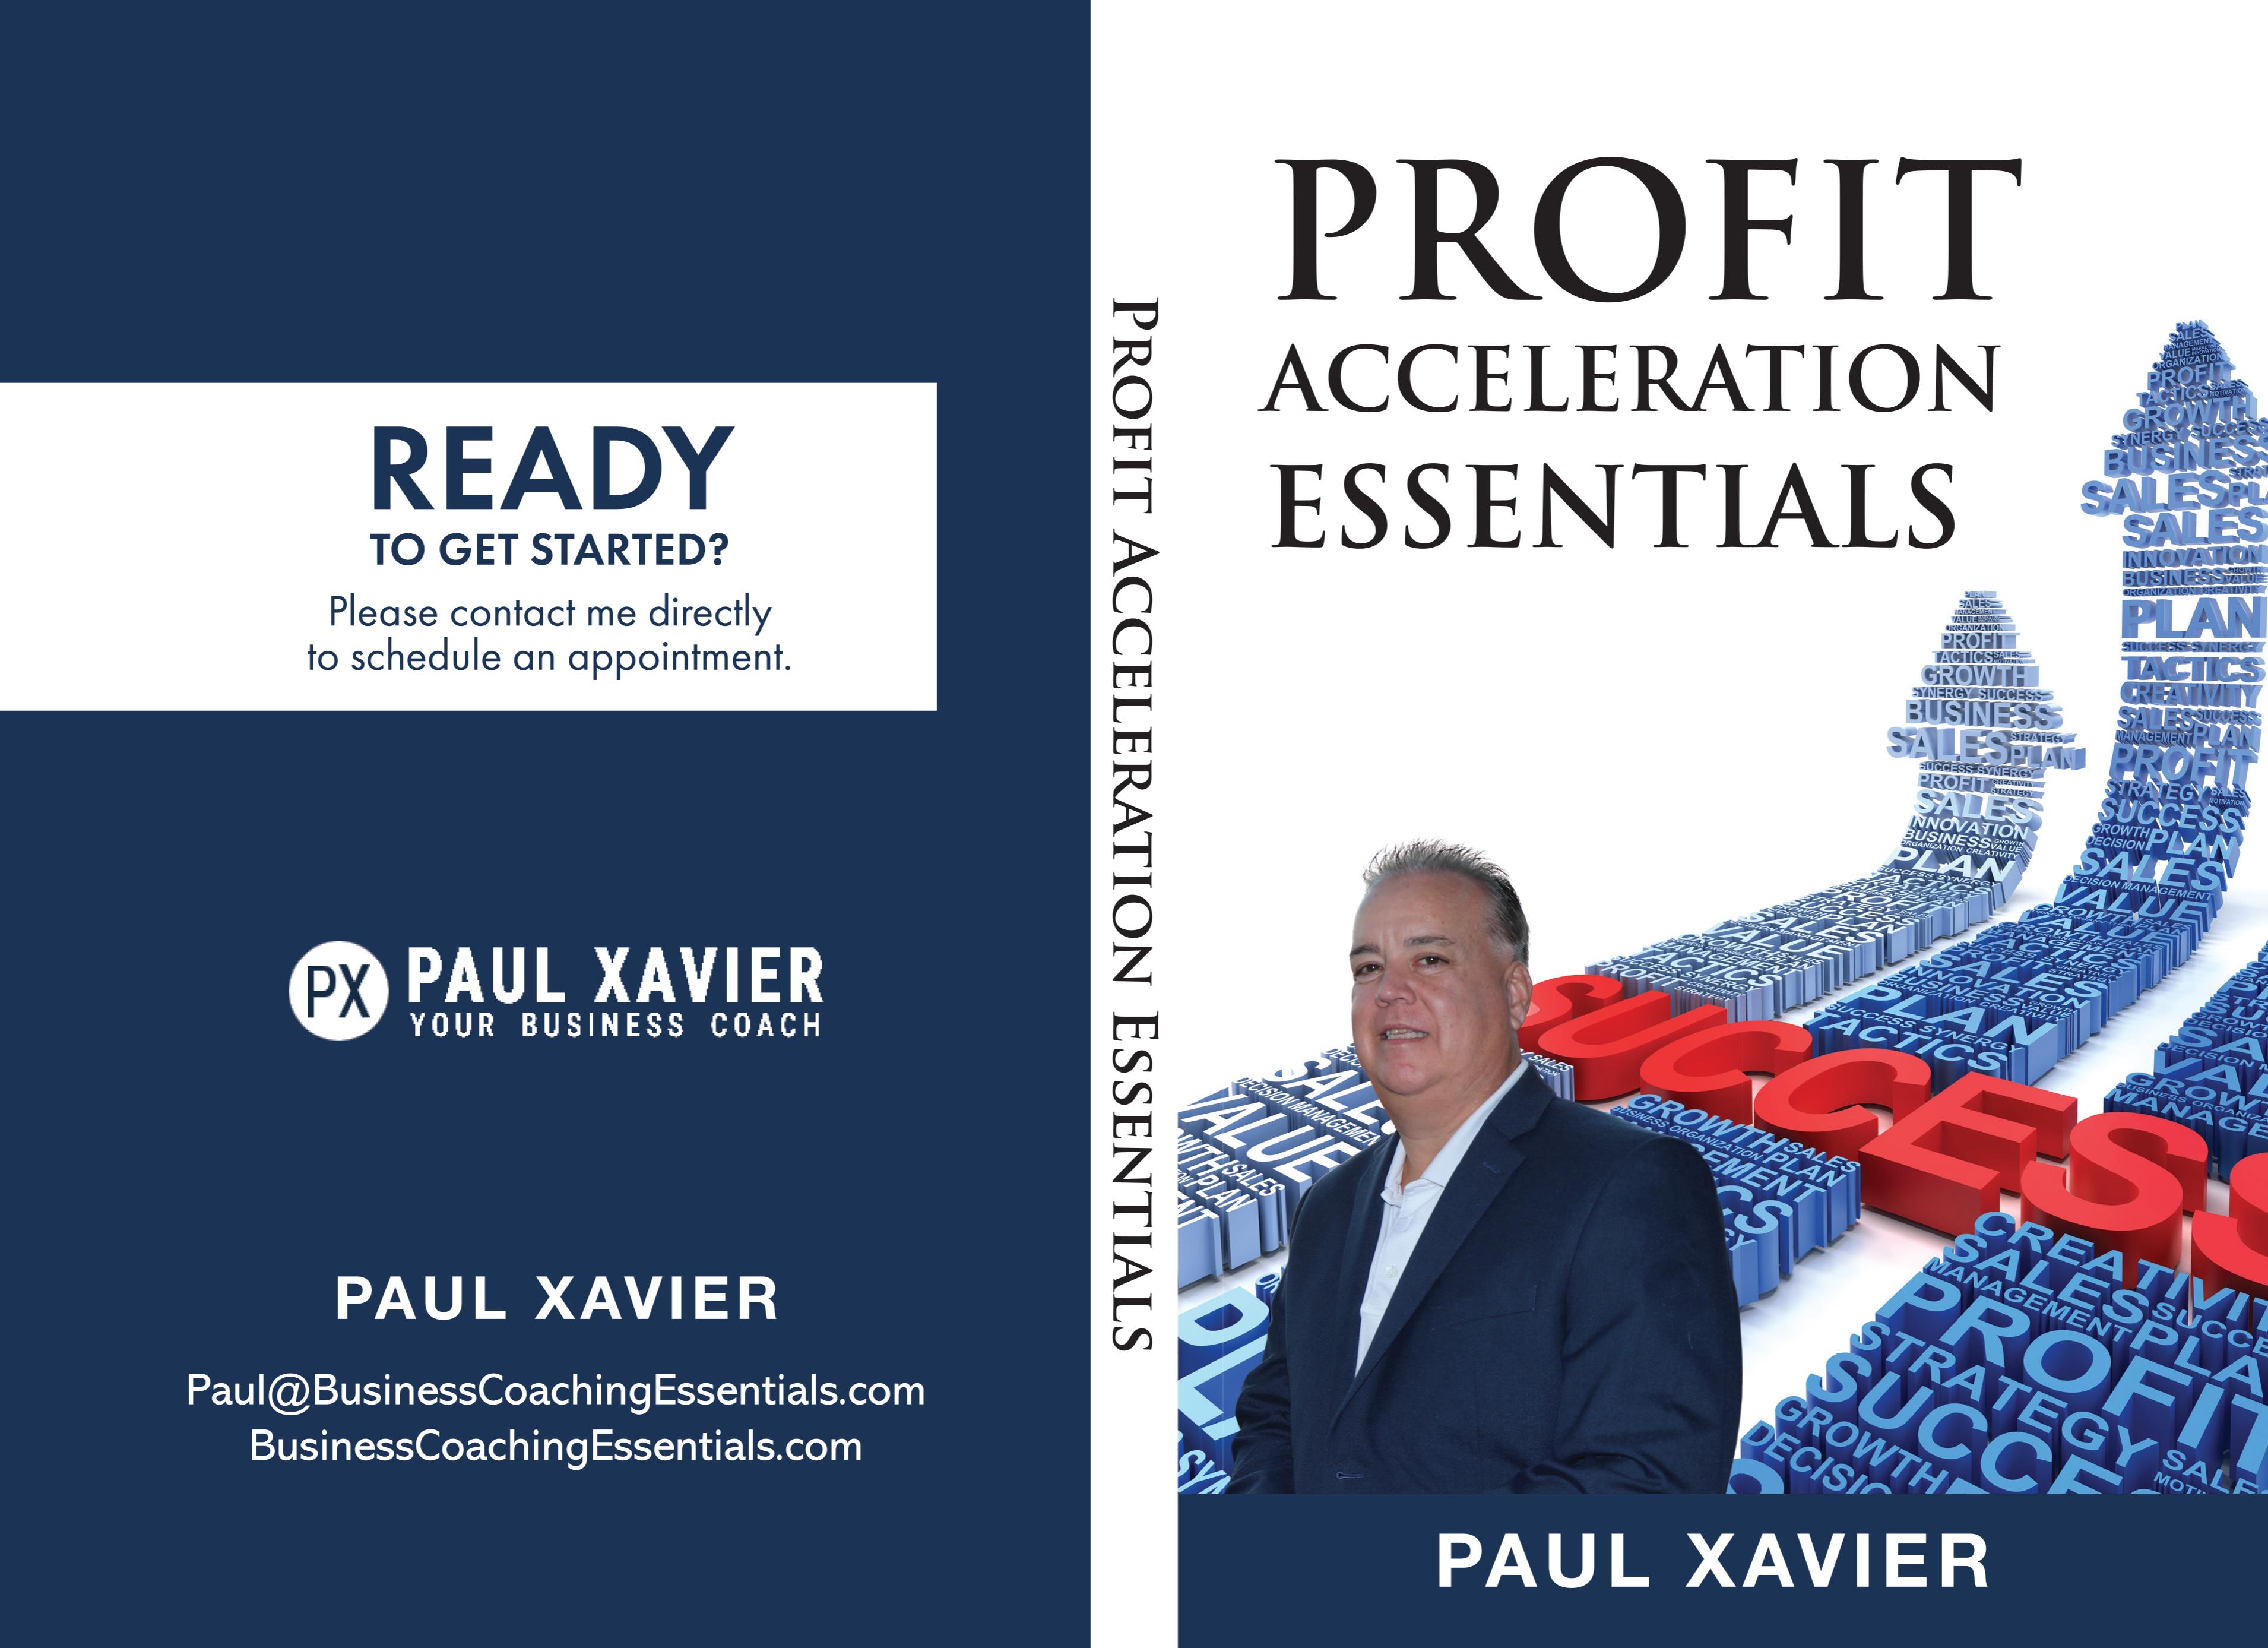 Profit Acceleration Essentials cover image